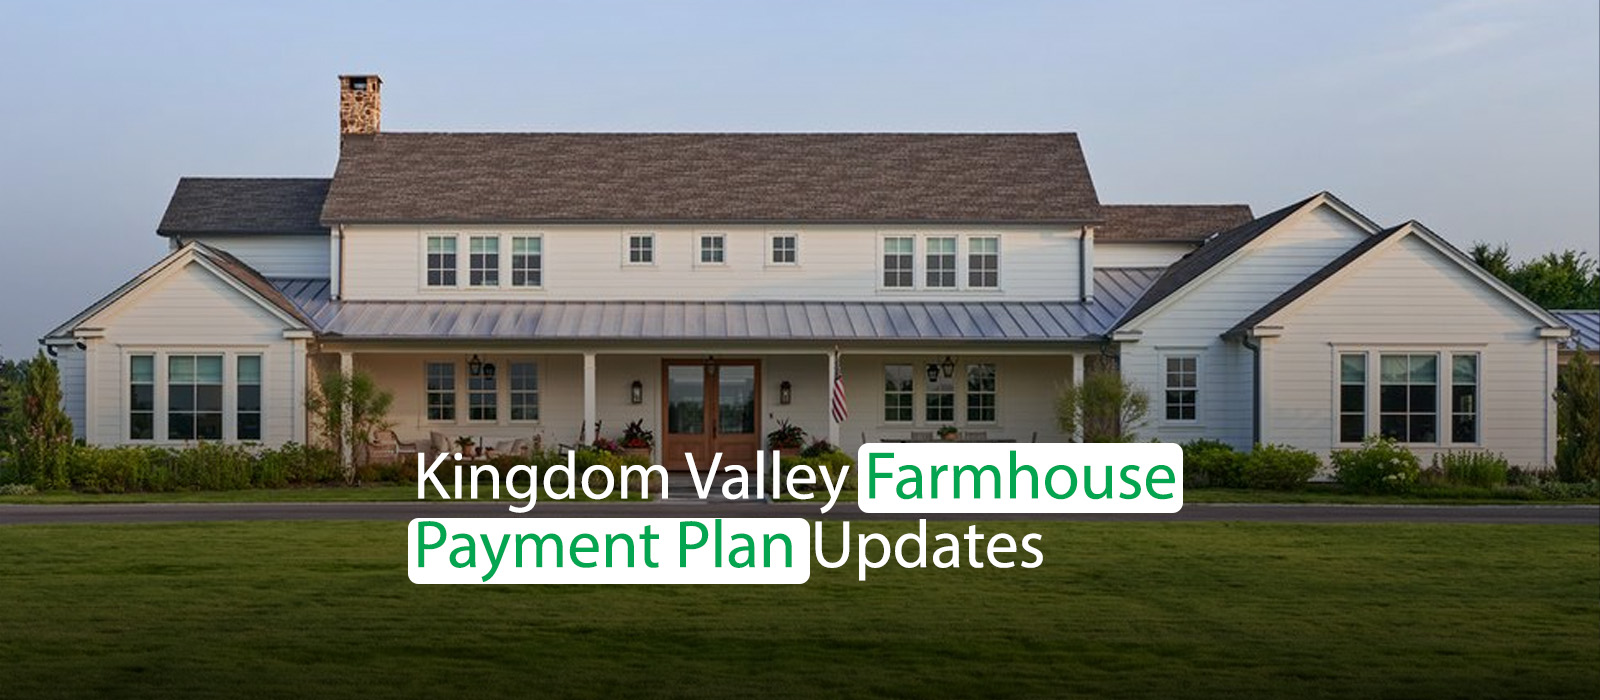 Kingdom Valley Farmhouse Payment Plan Updates